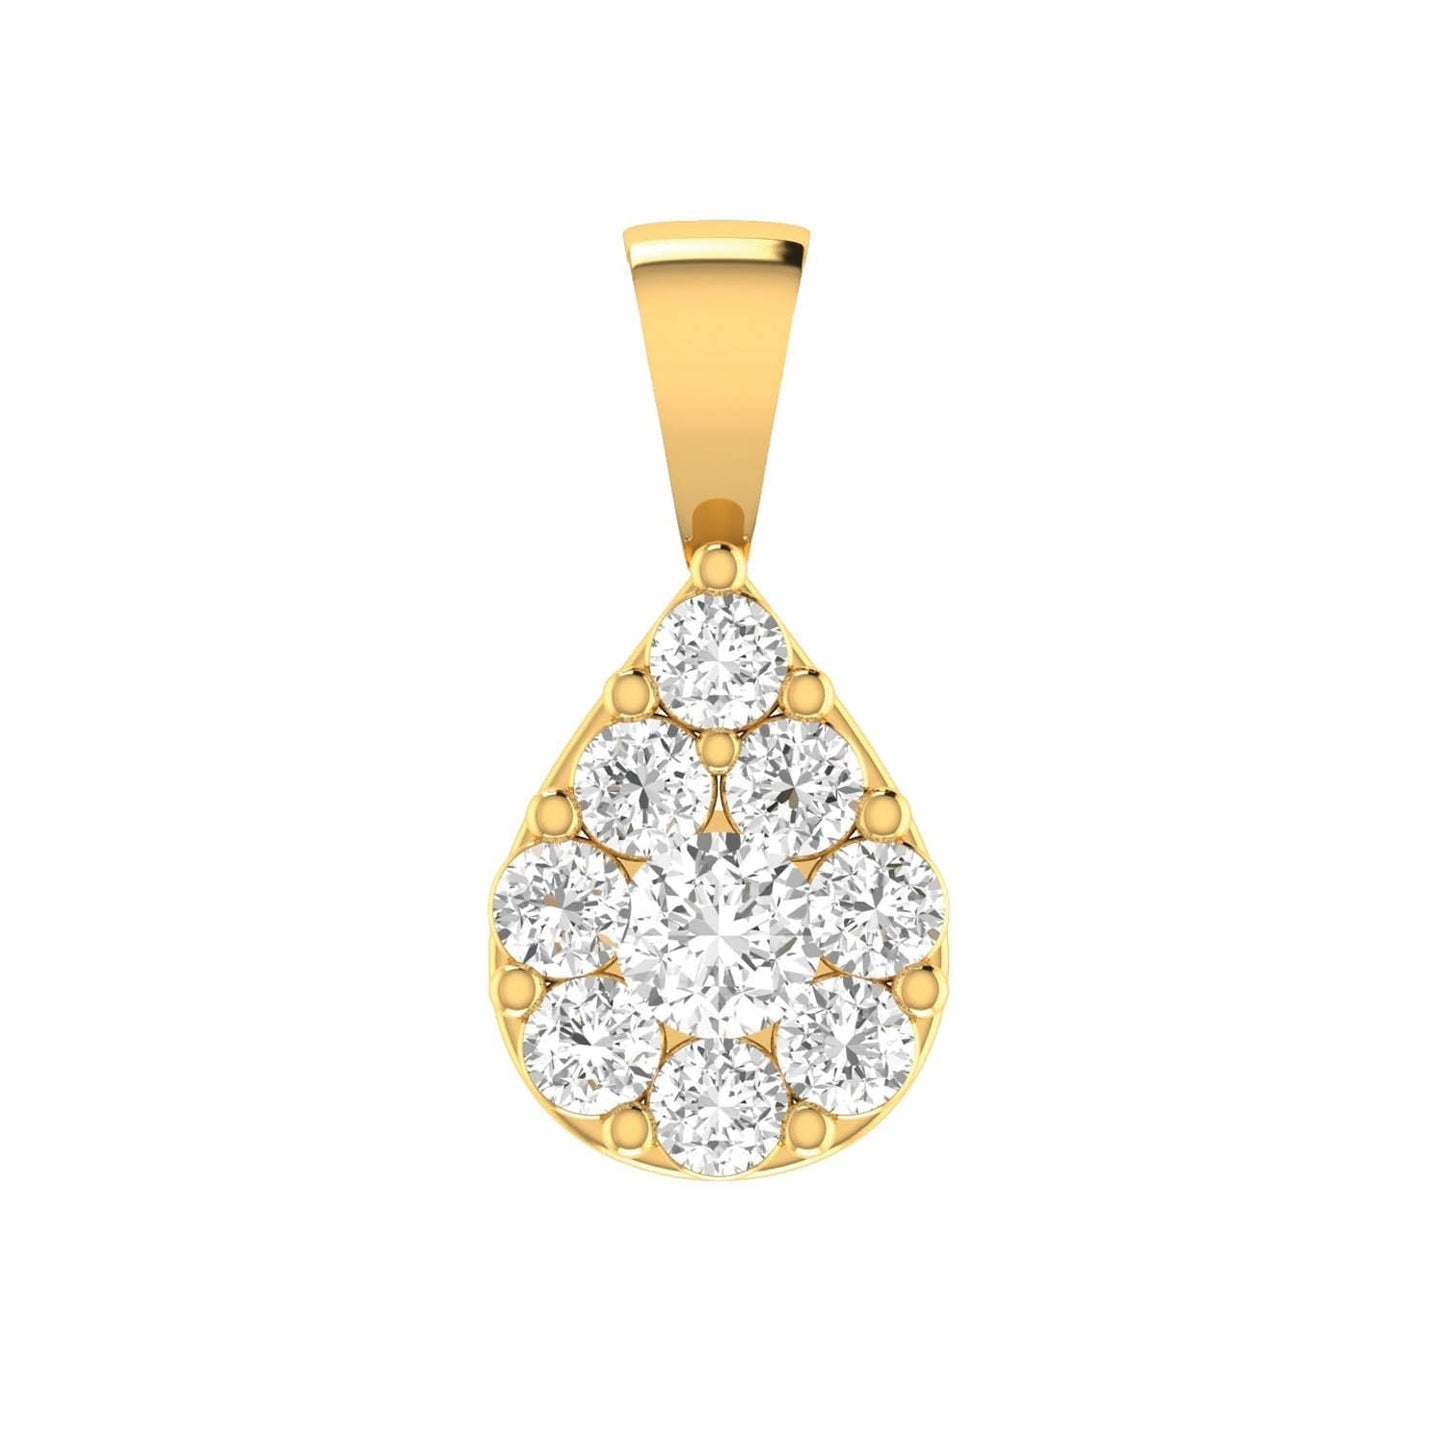 Teardrop Diamond Pendant with 0.25ct Diamonds in 9K Yellow Gold - 9YTDP25GH